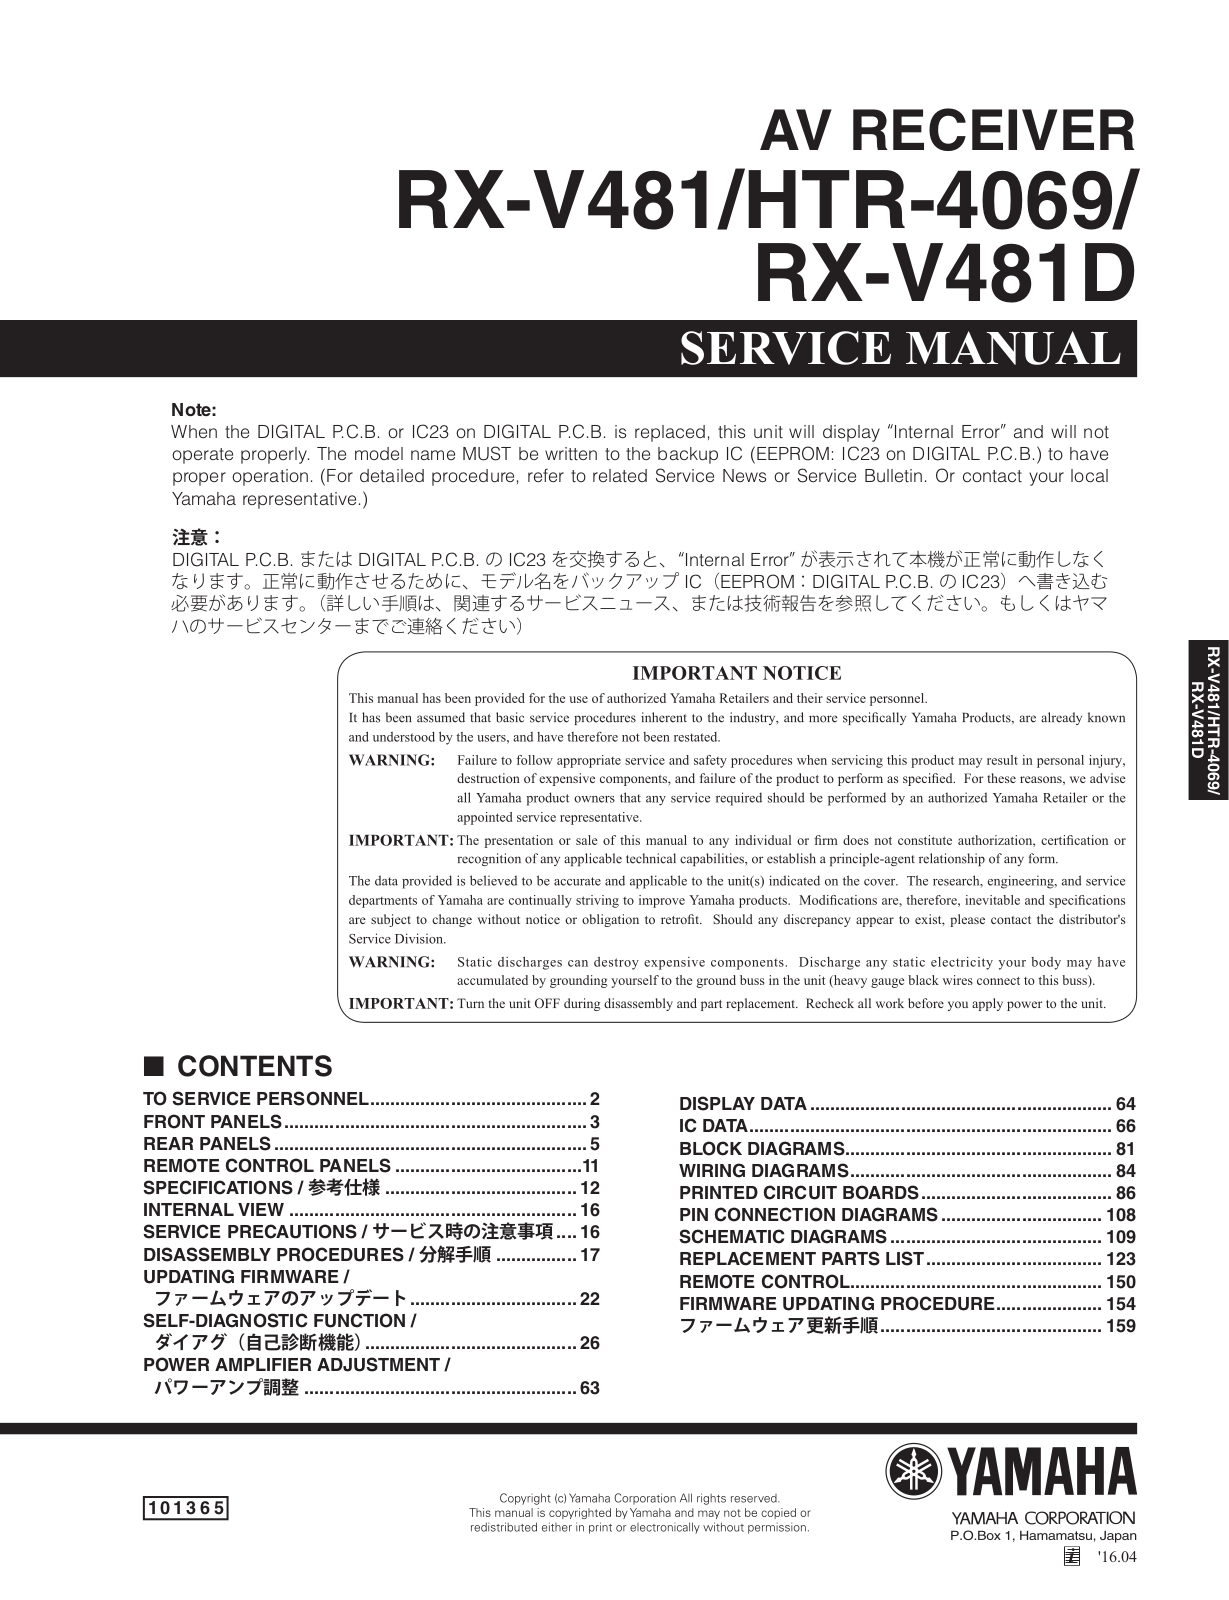 Yamaha RX-V481, HTR-4069, RX-V481D Service manual